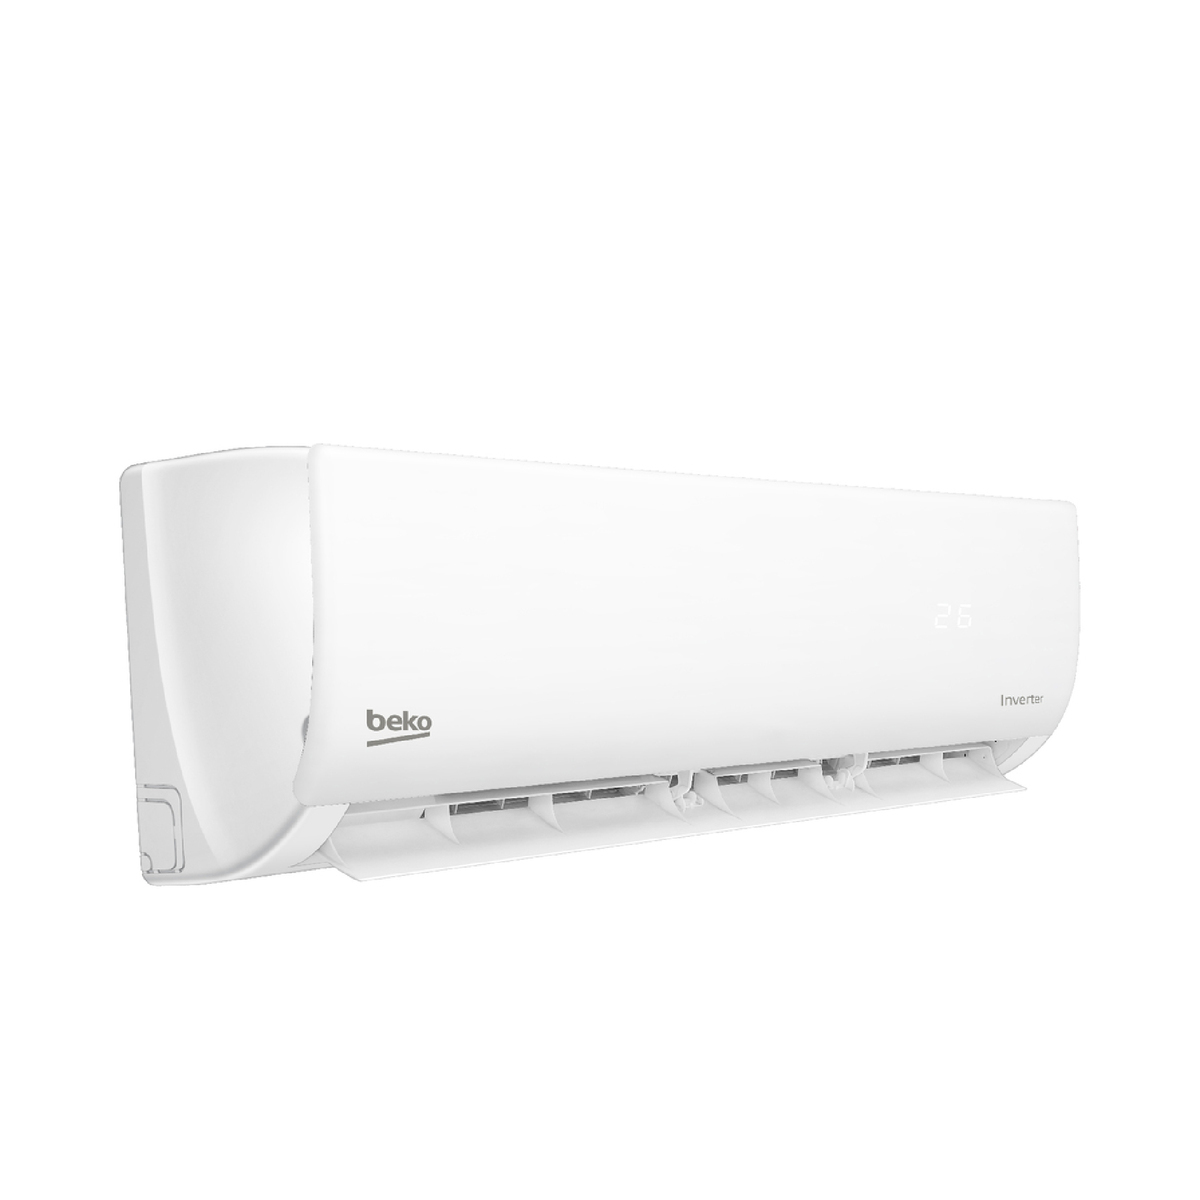 Beko Heat & Cool Split Air Conditioner BMVIF180 1.5Ton